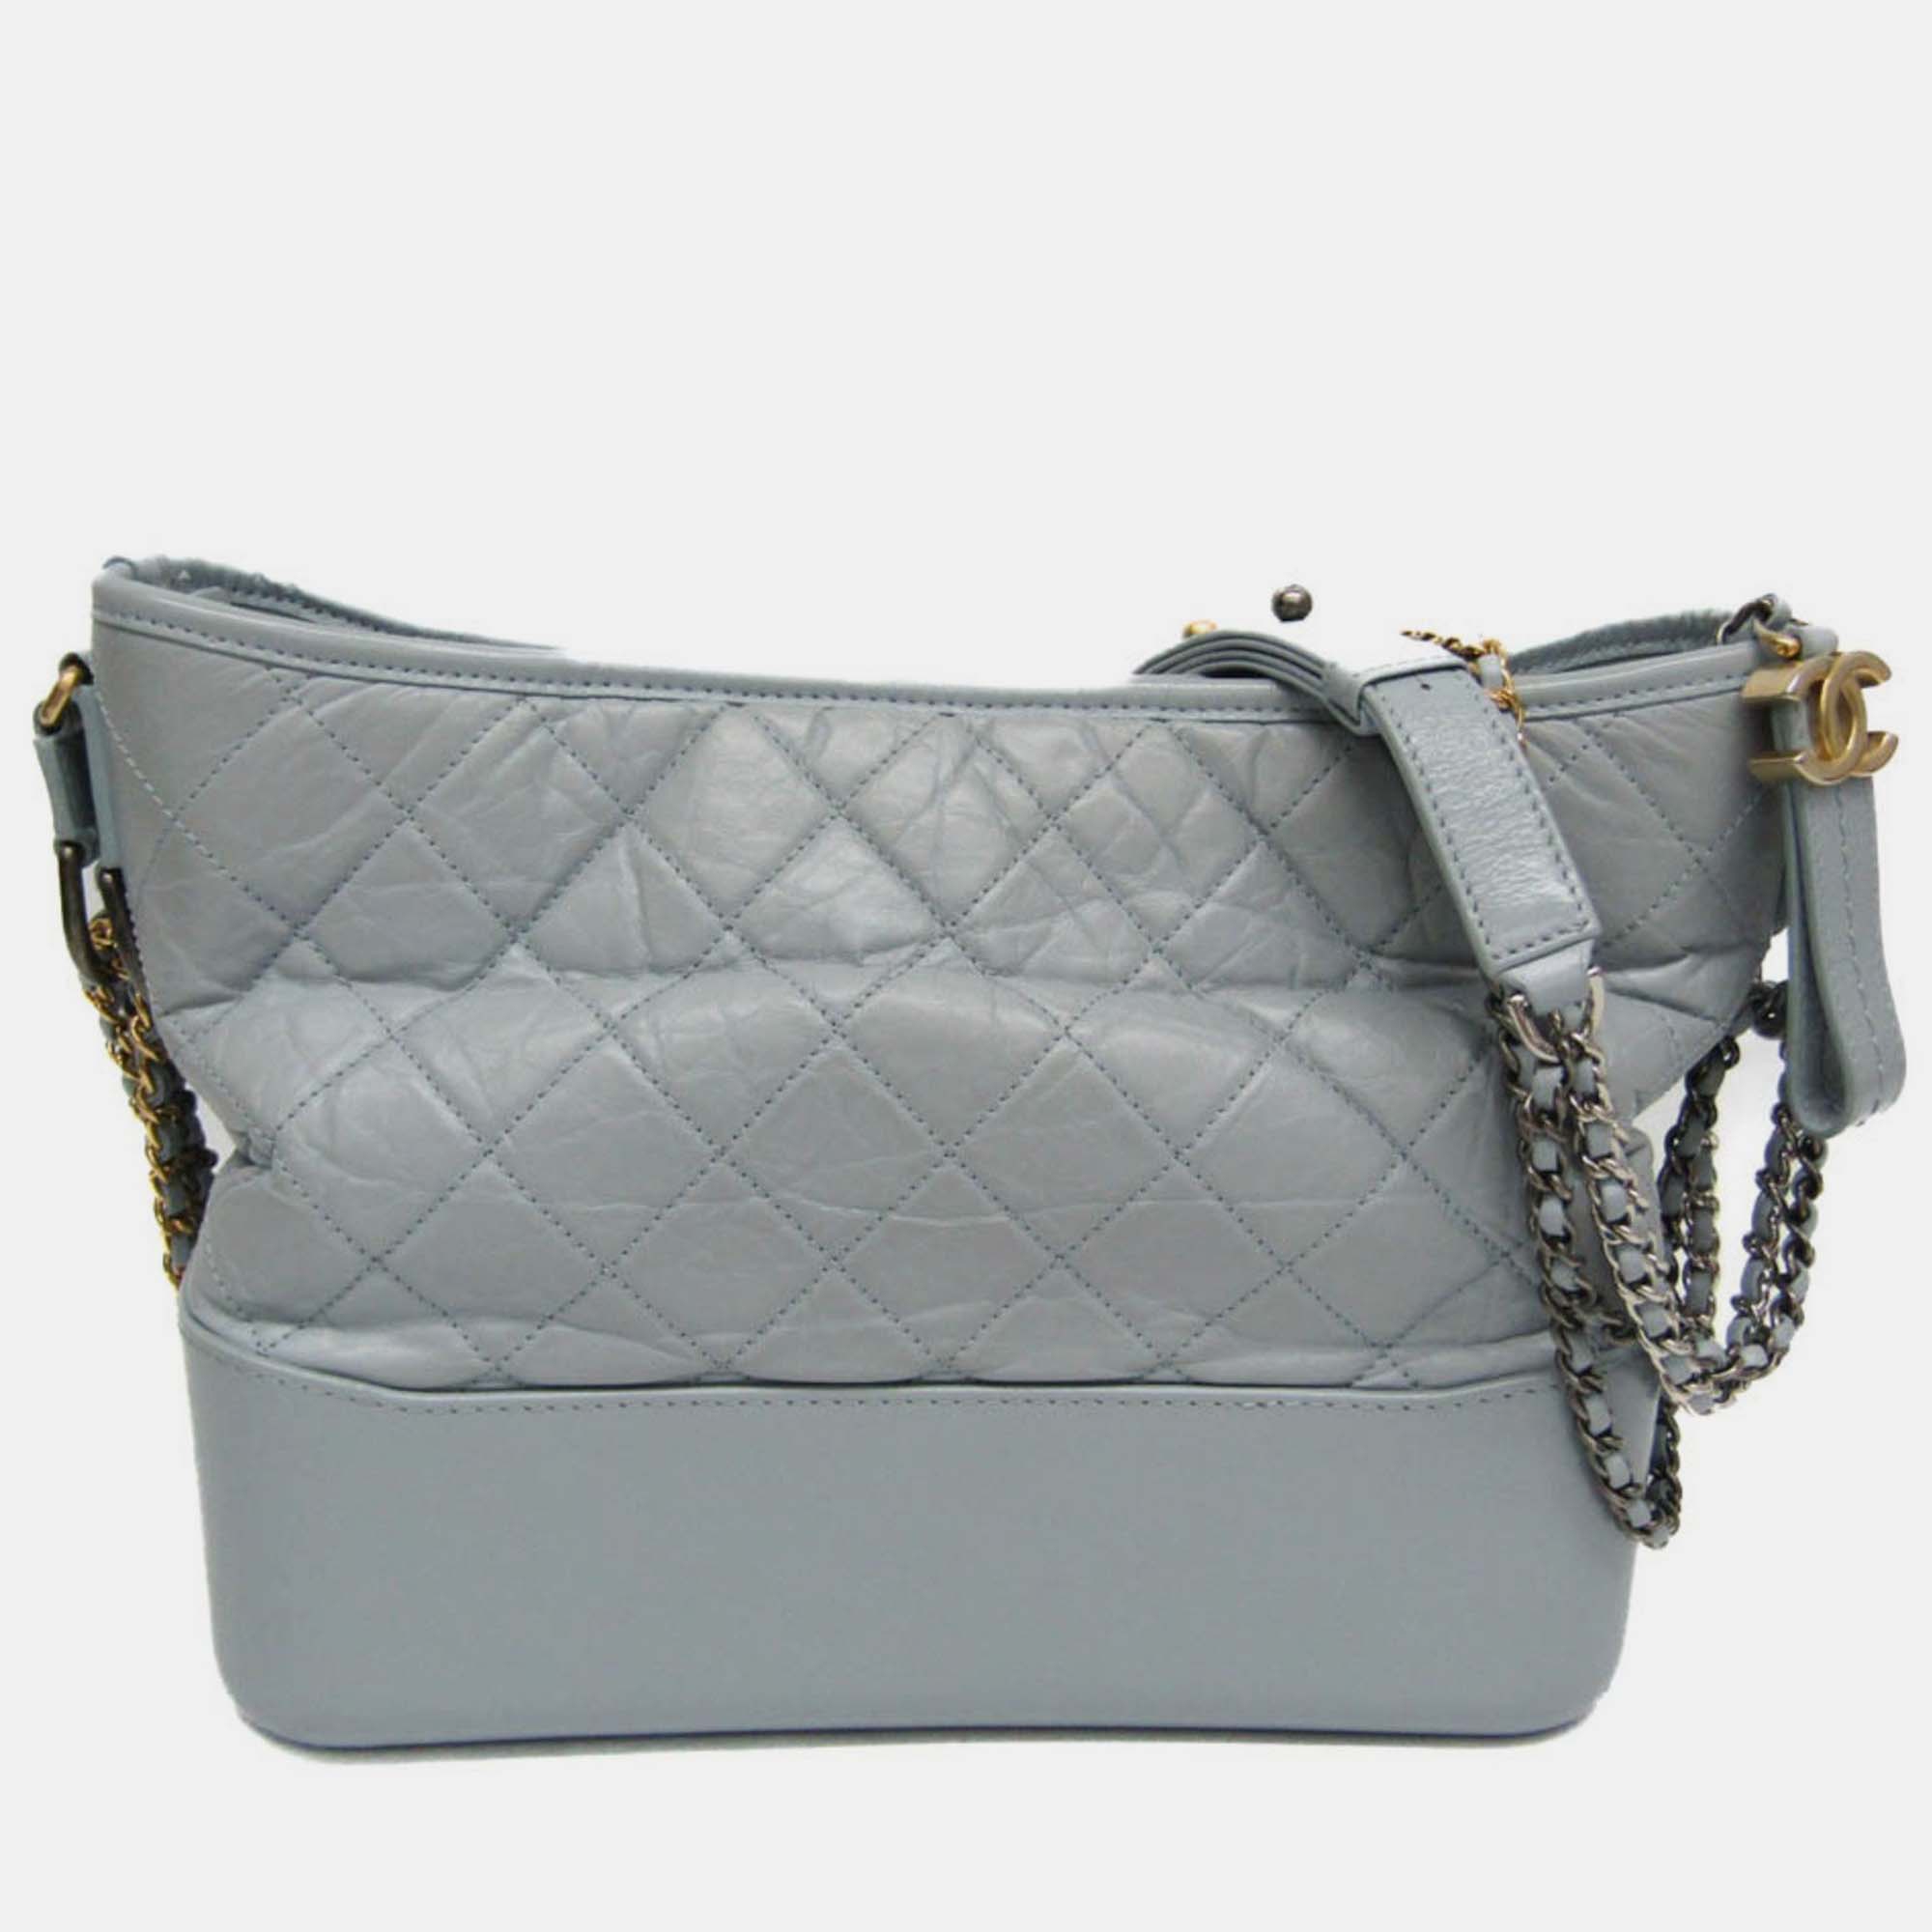 Chanel light blue leather medium gabrielle hobo bag